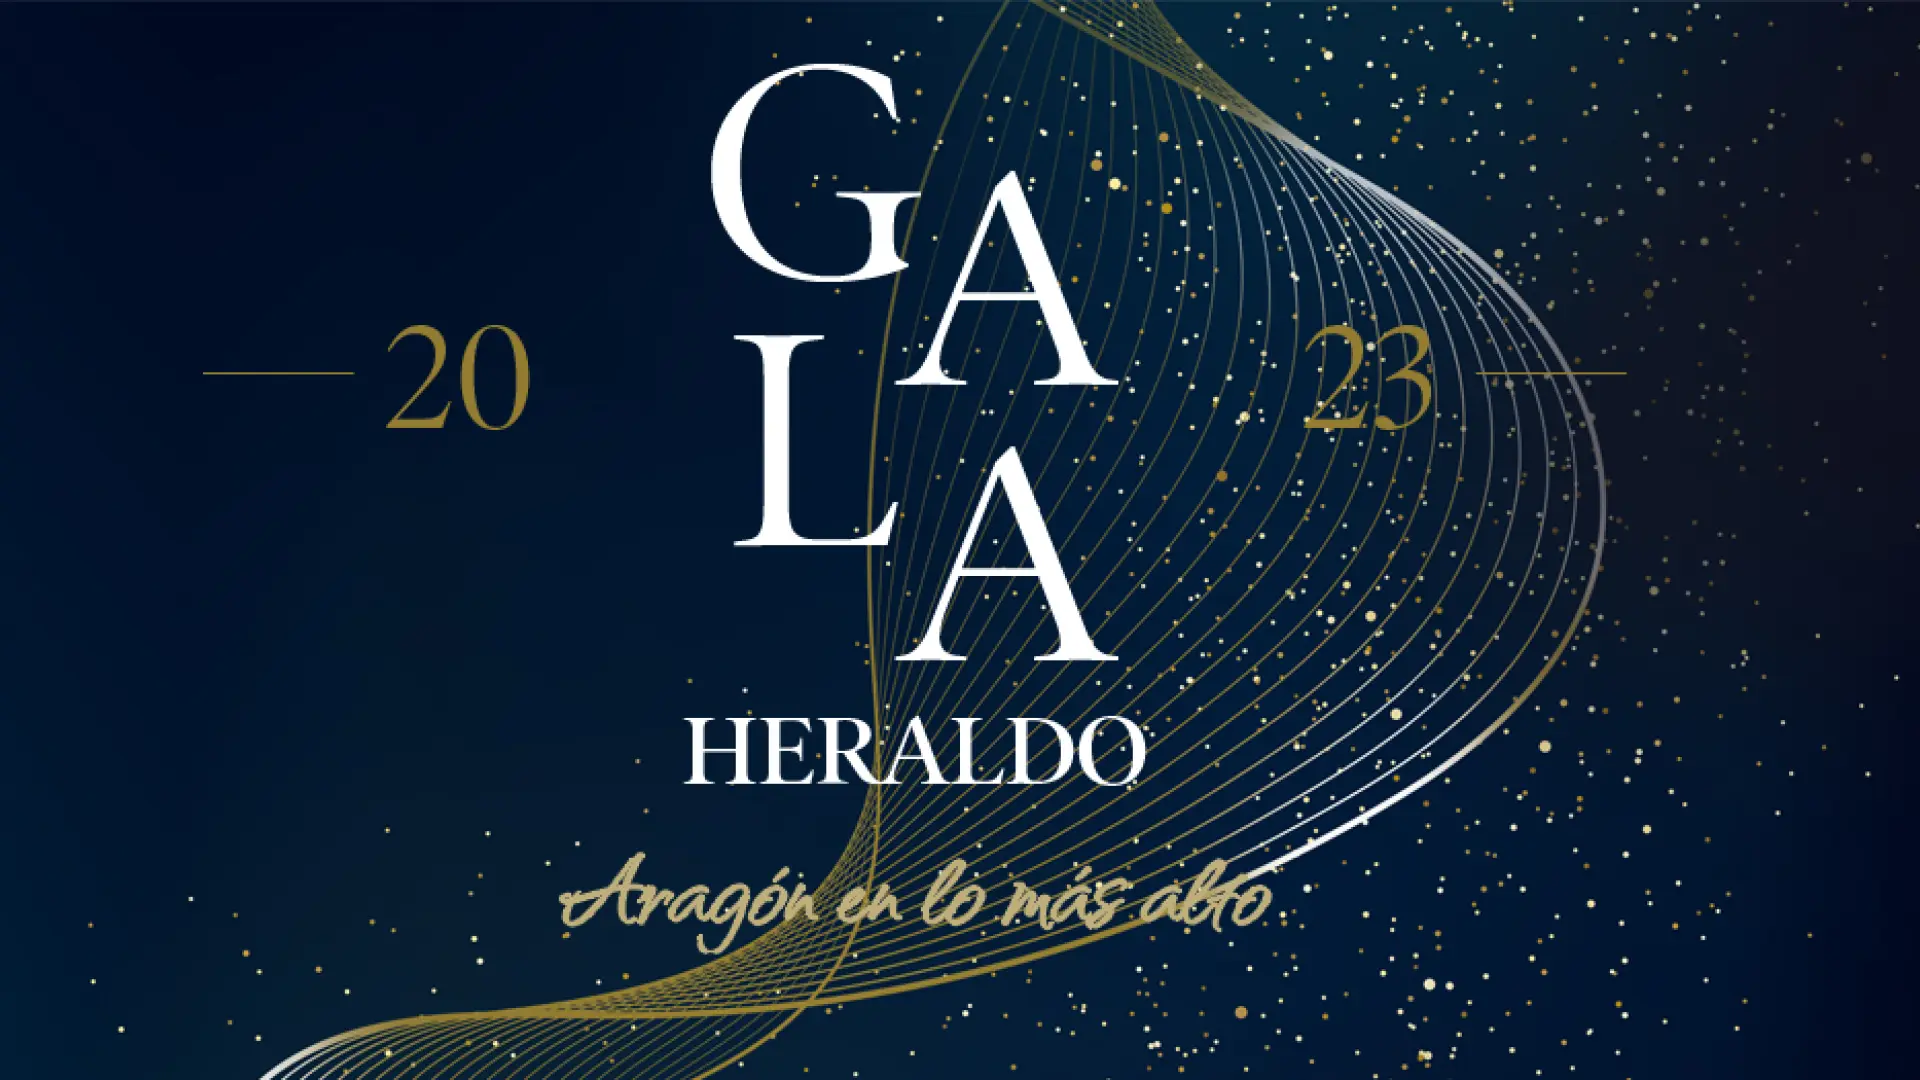 Gala Heraldo 2023